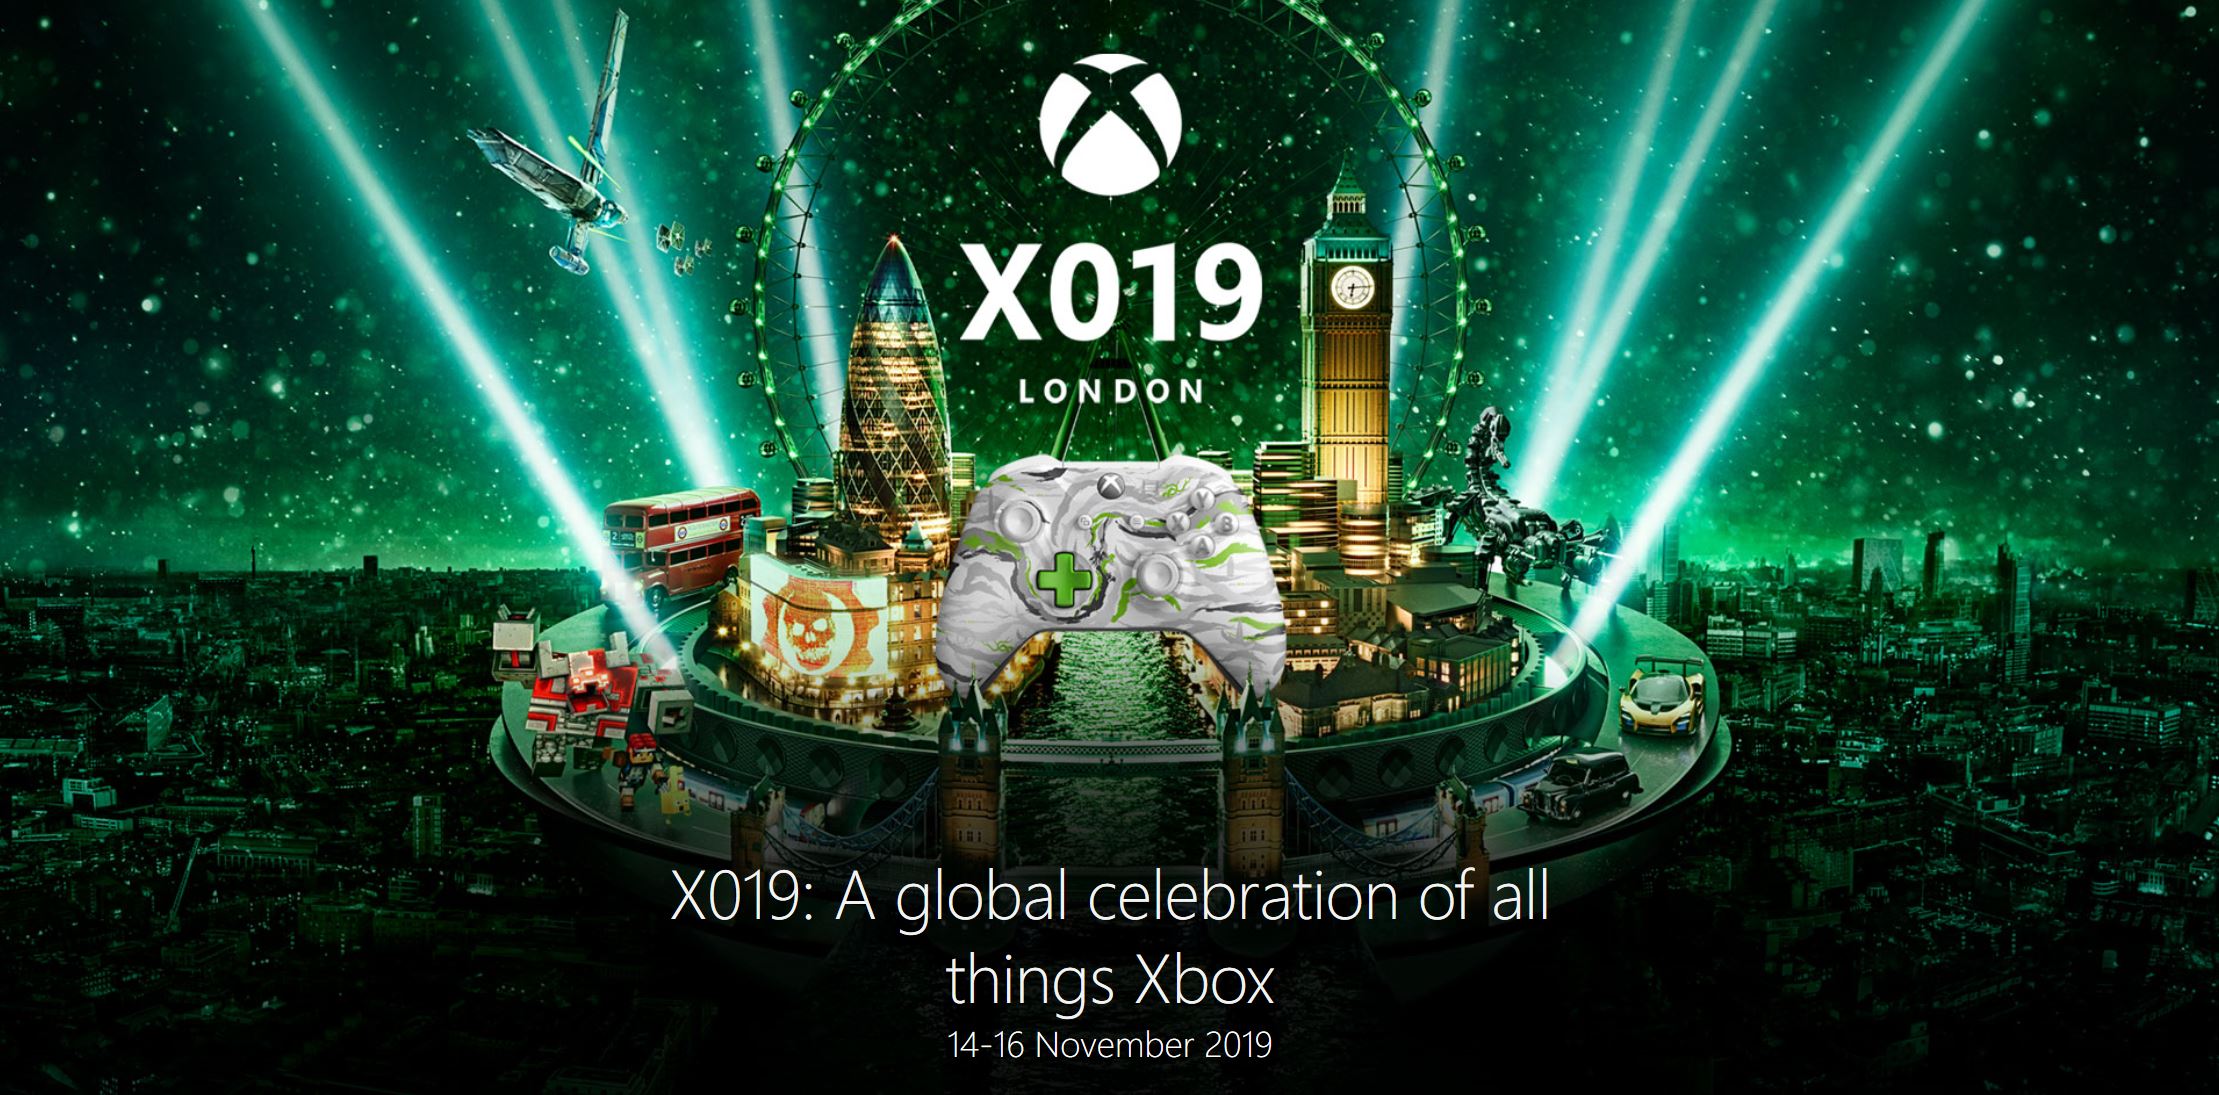 X019 promotional image